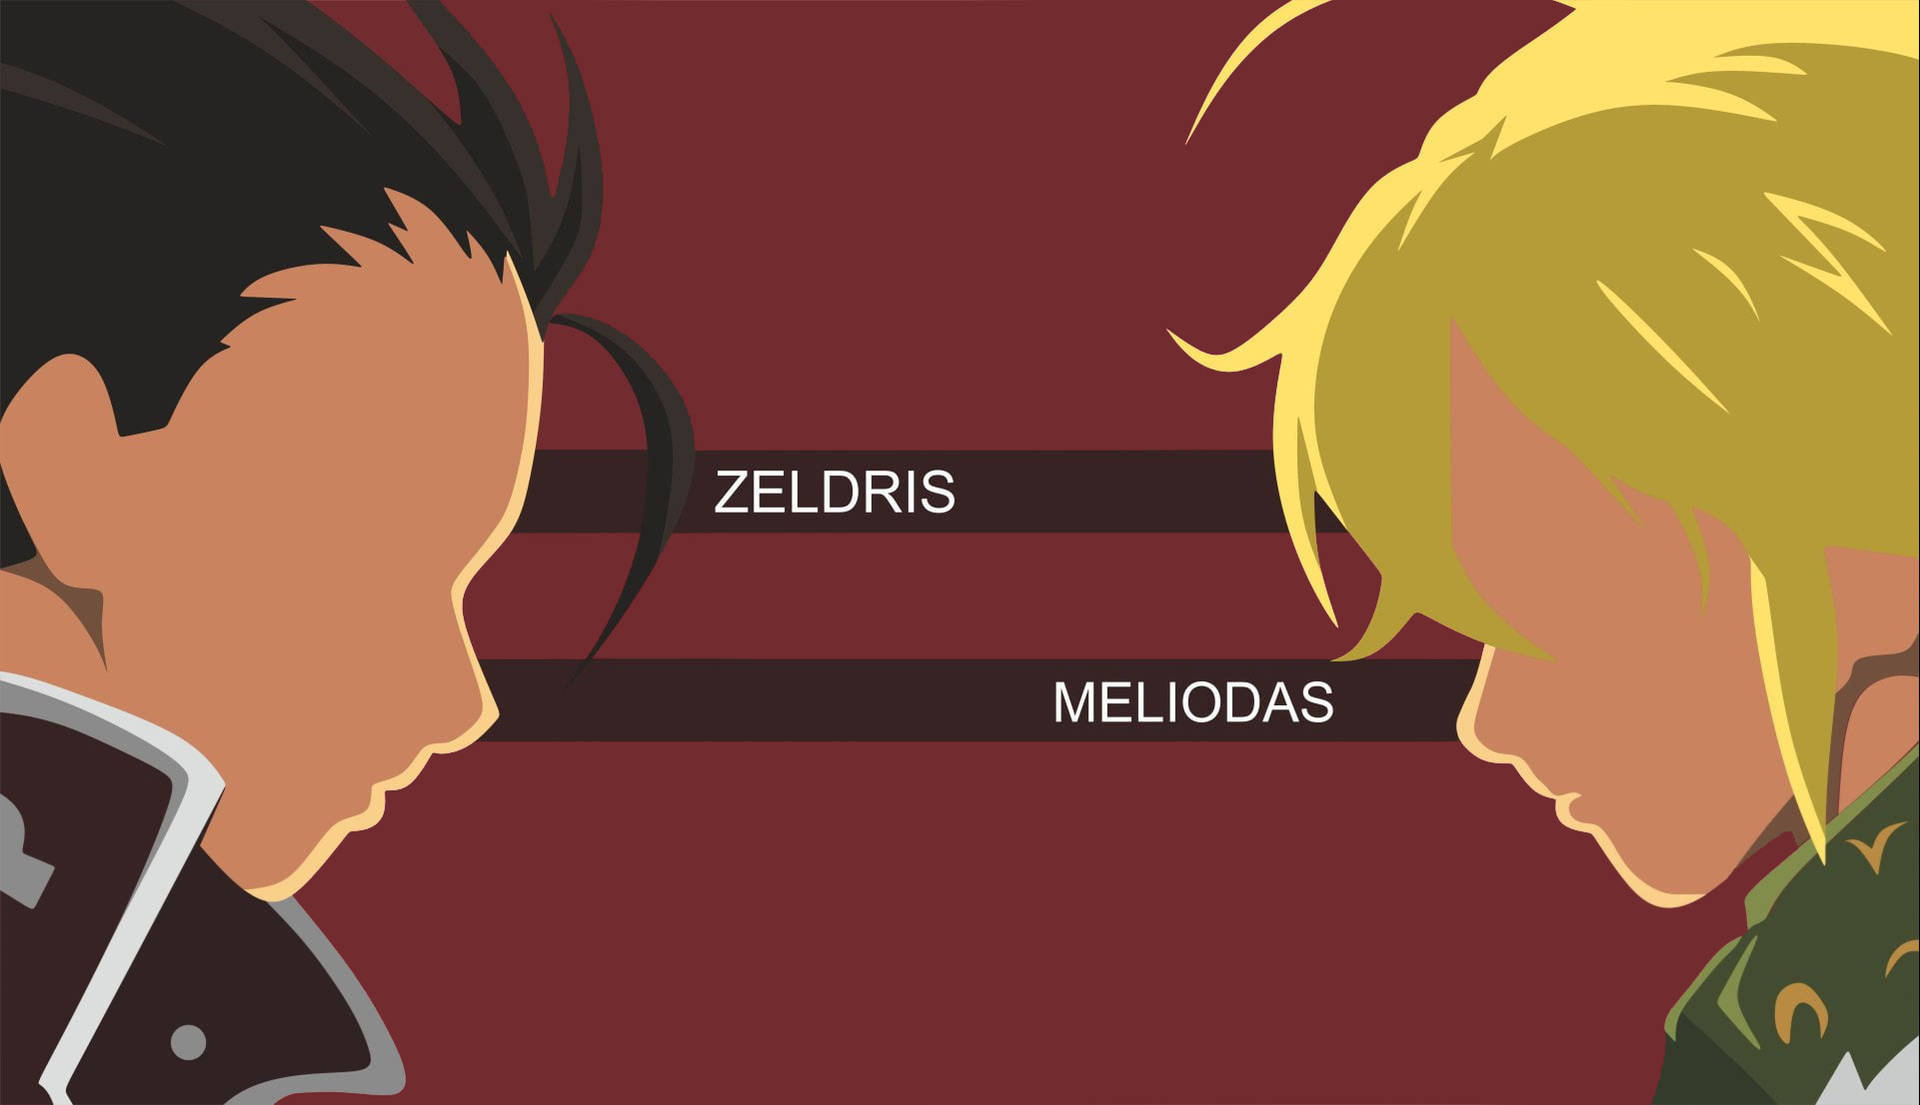 Faceless Zeldris And Melodias